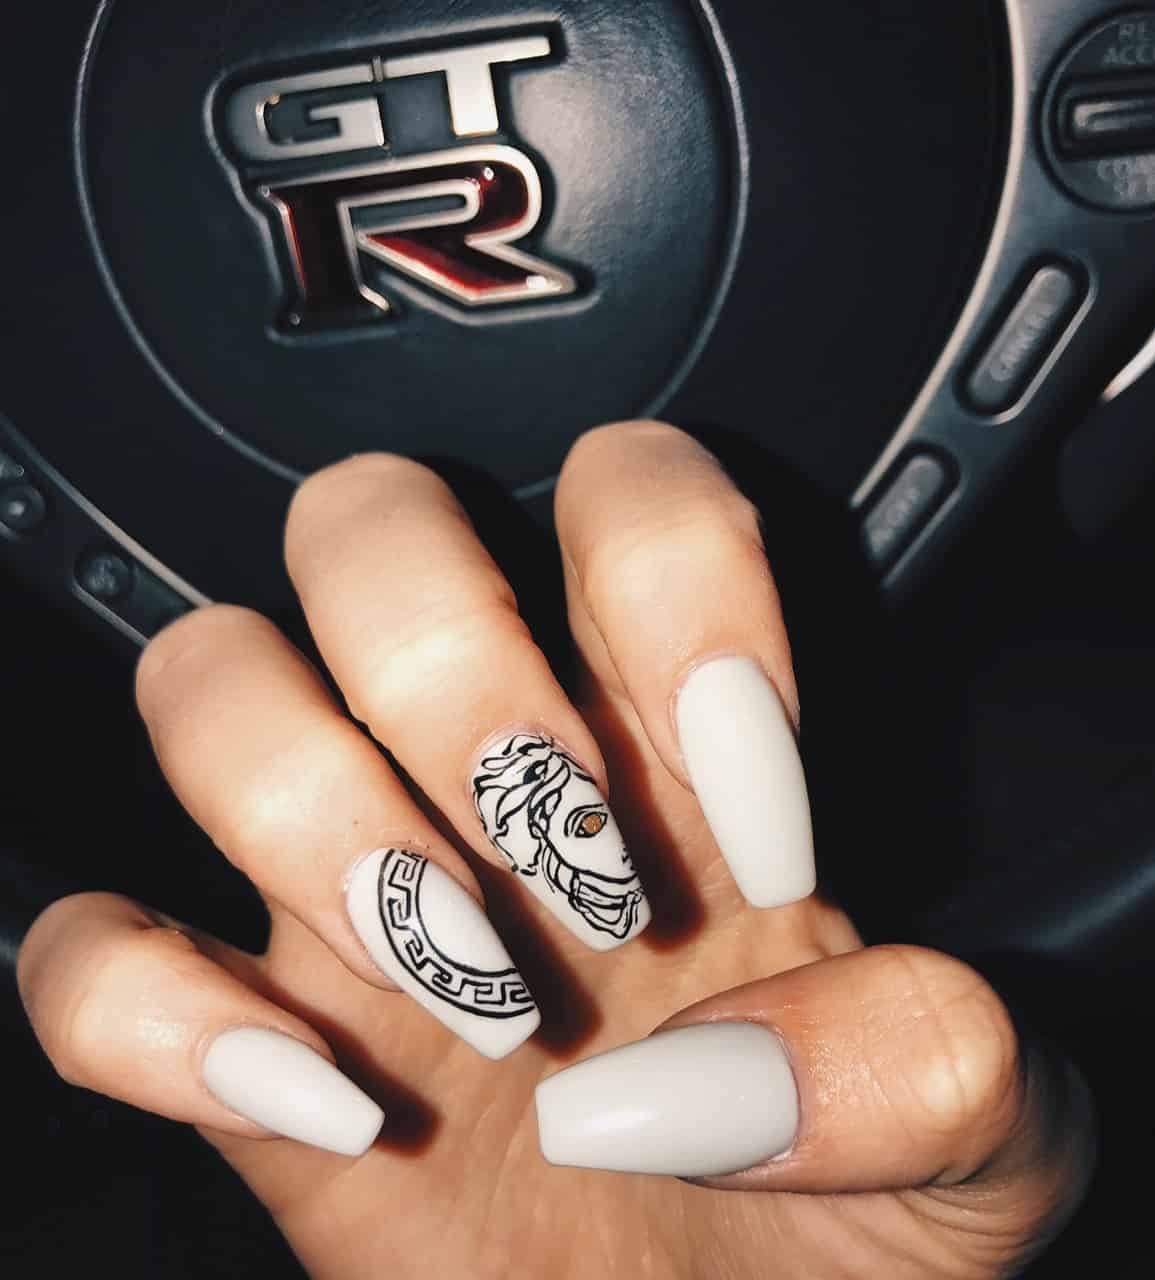 versace nail design